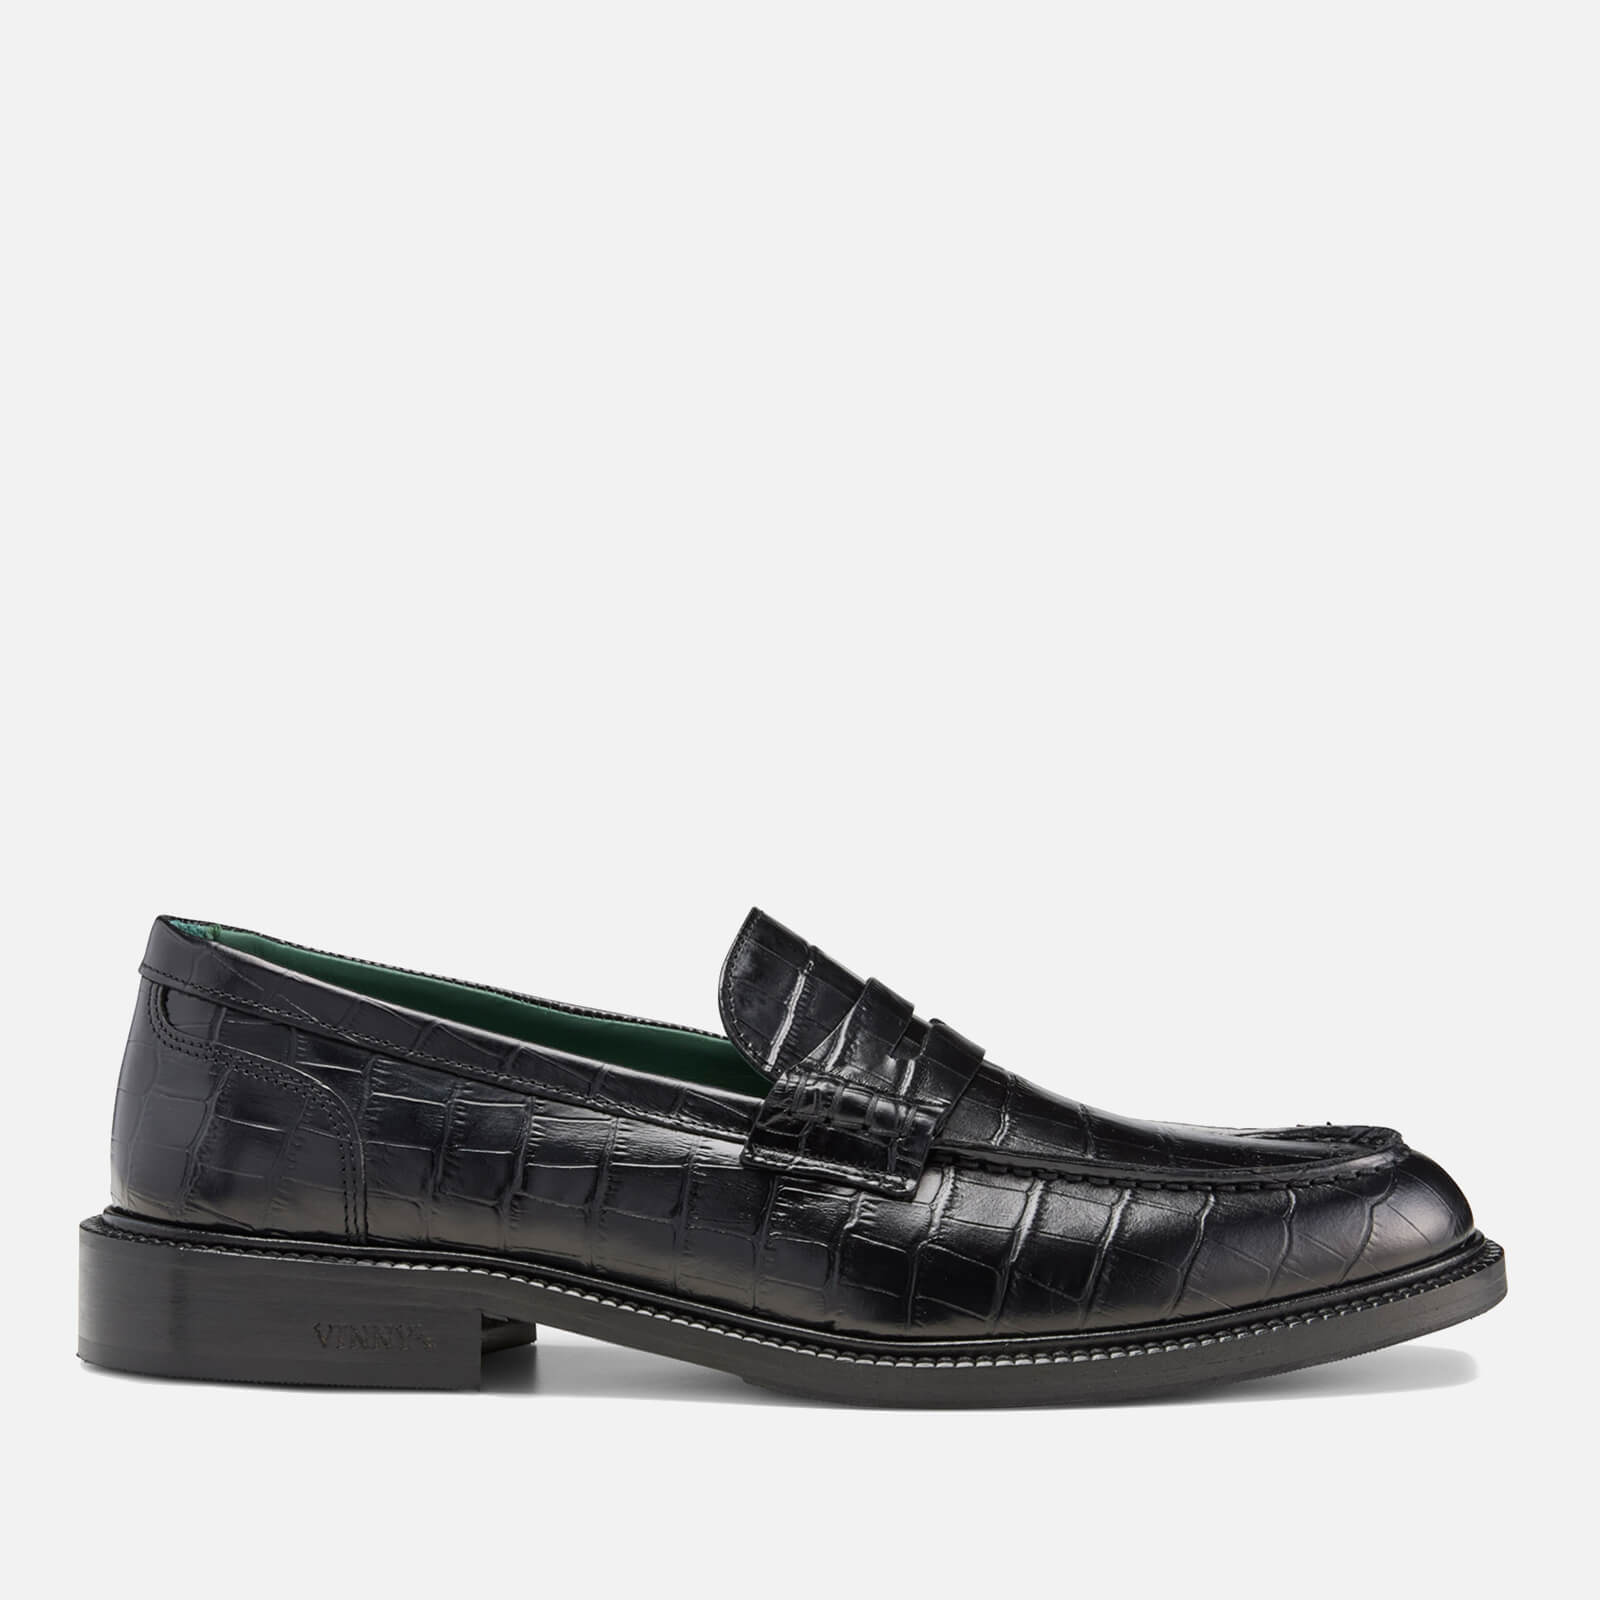 vinny's men's townee croc-effect leather penny loafer - uk 7